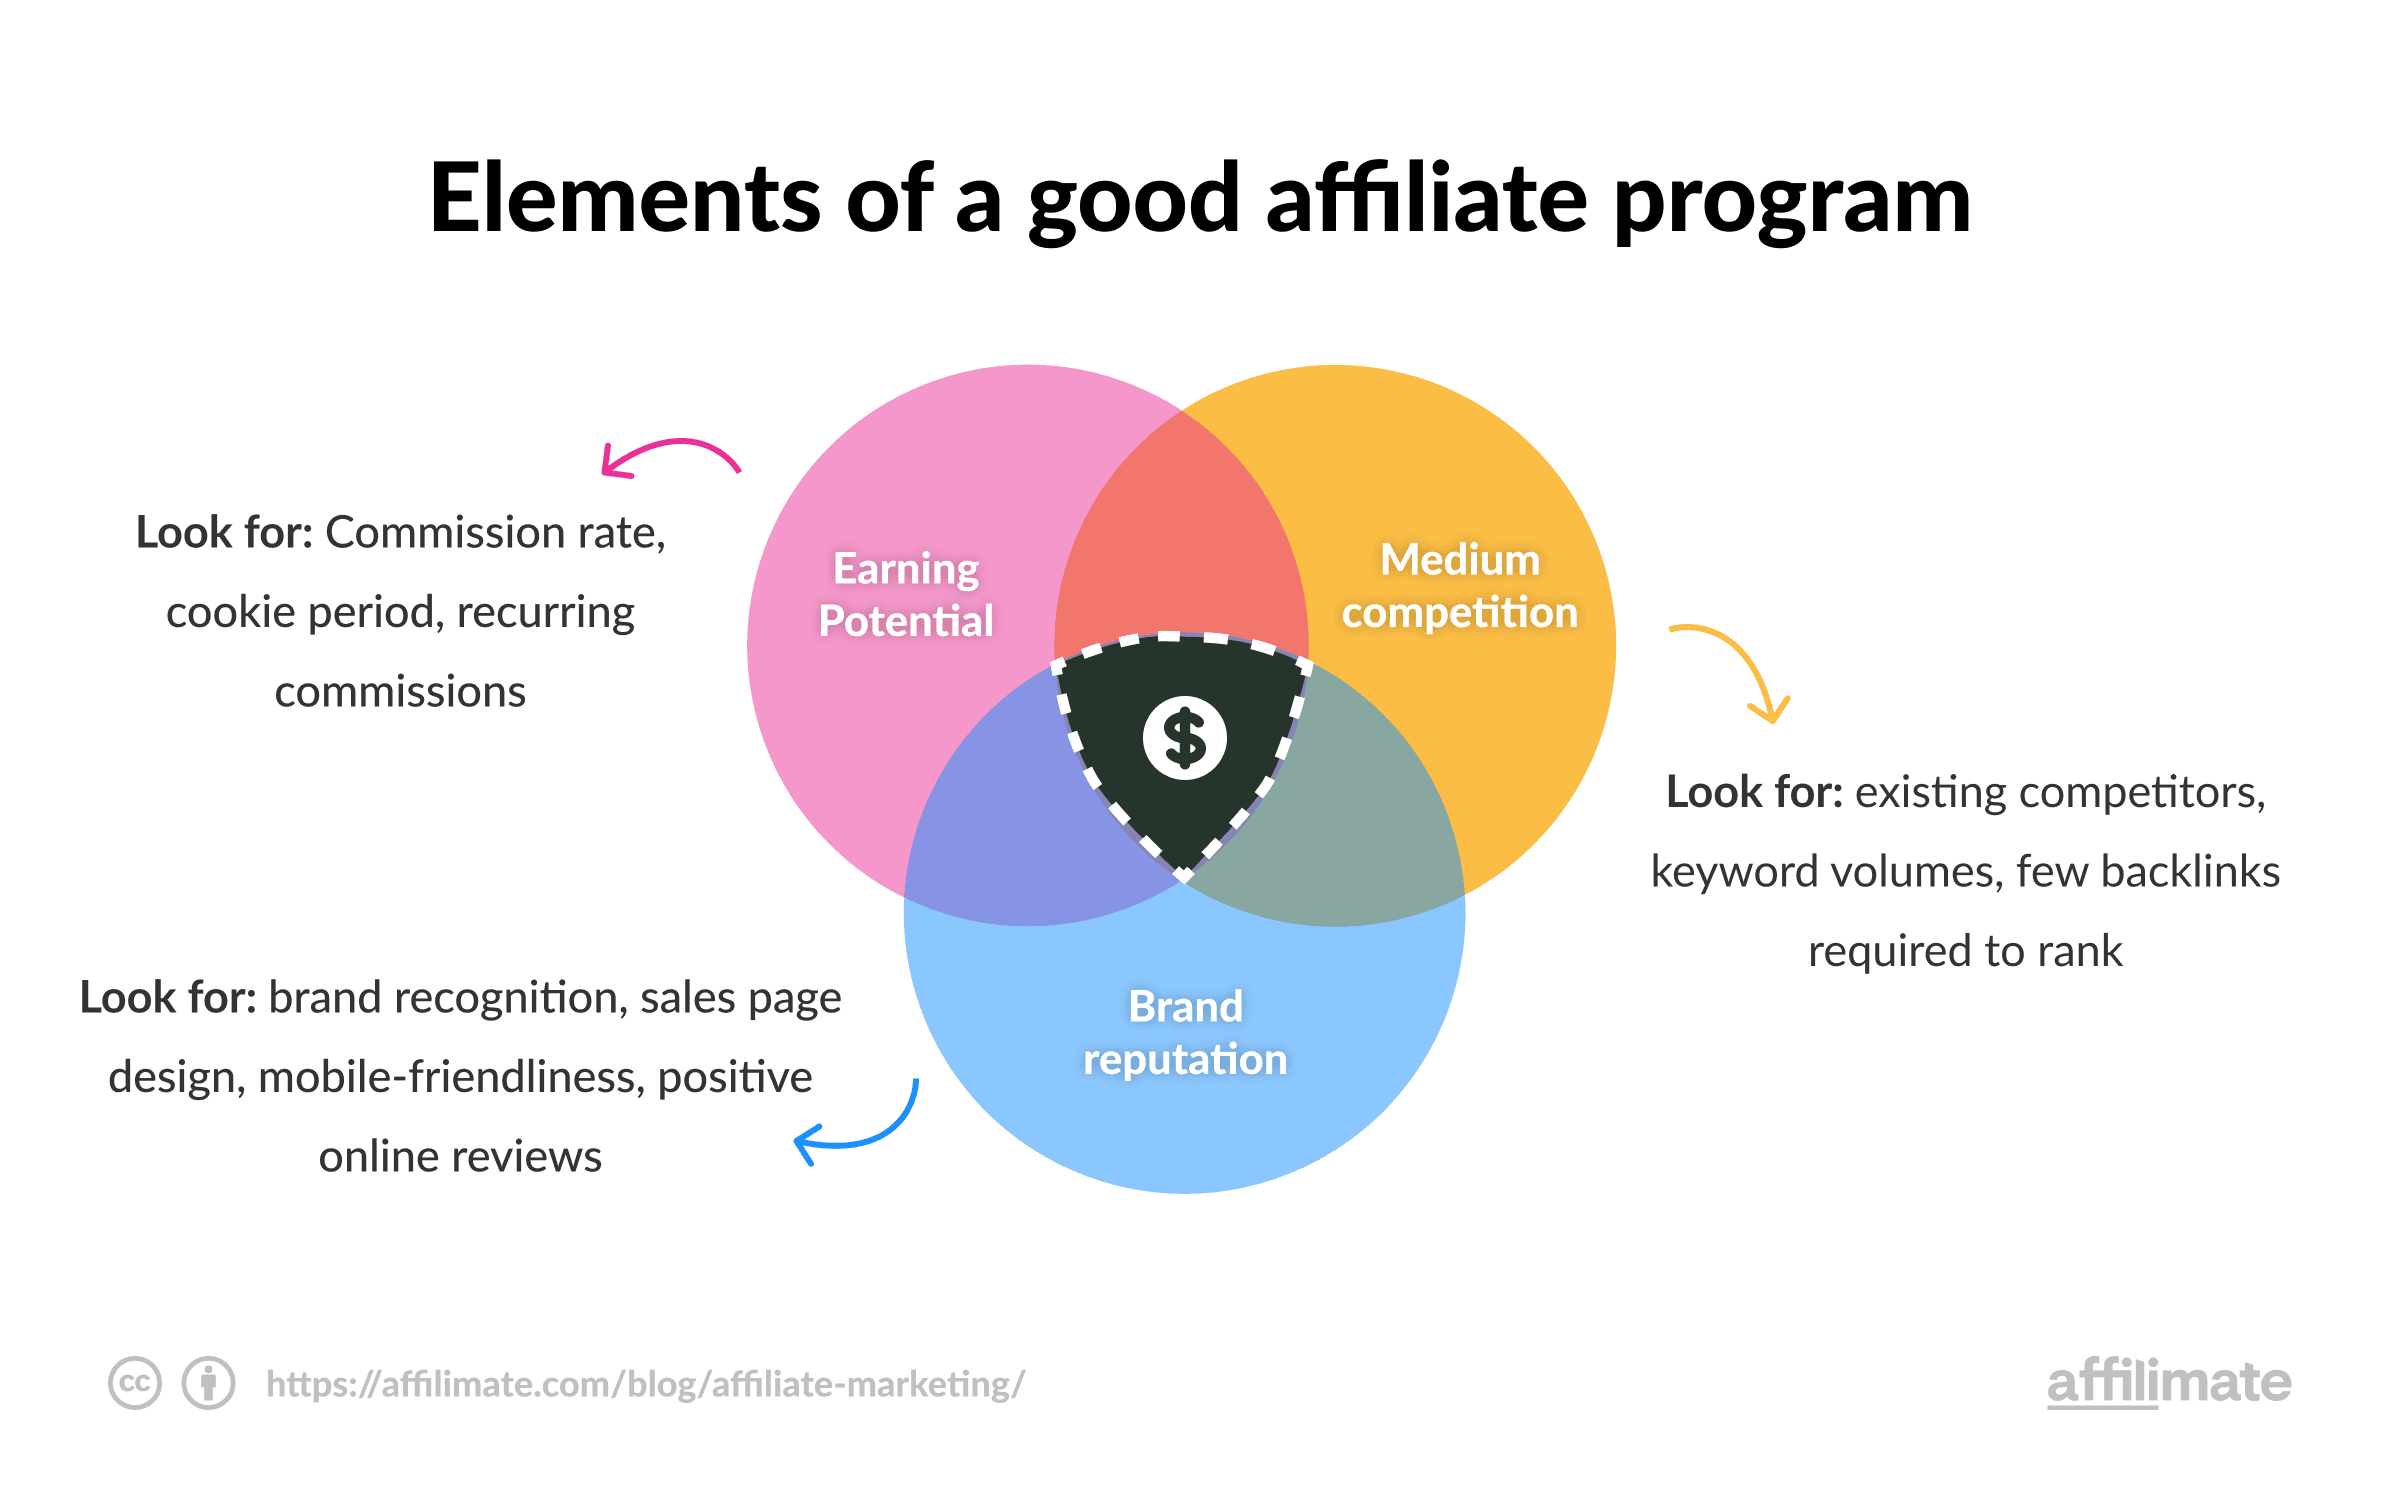 Elements of Good Affiliate Program